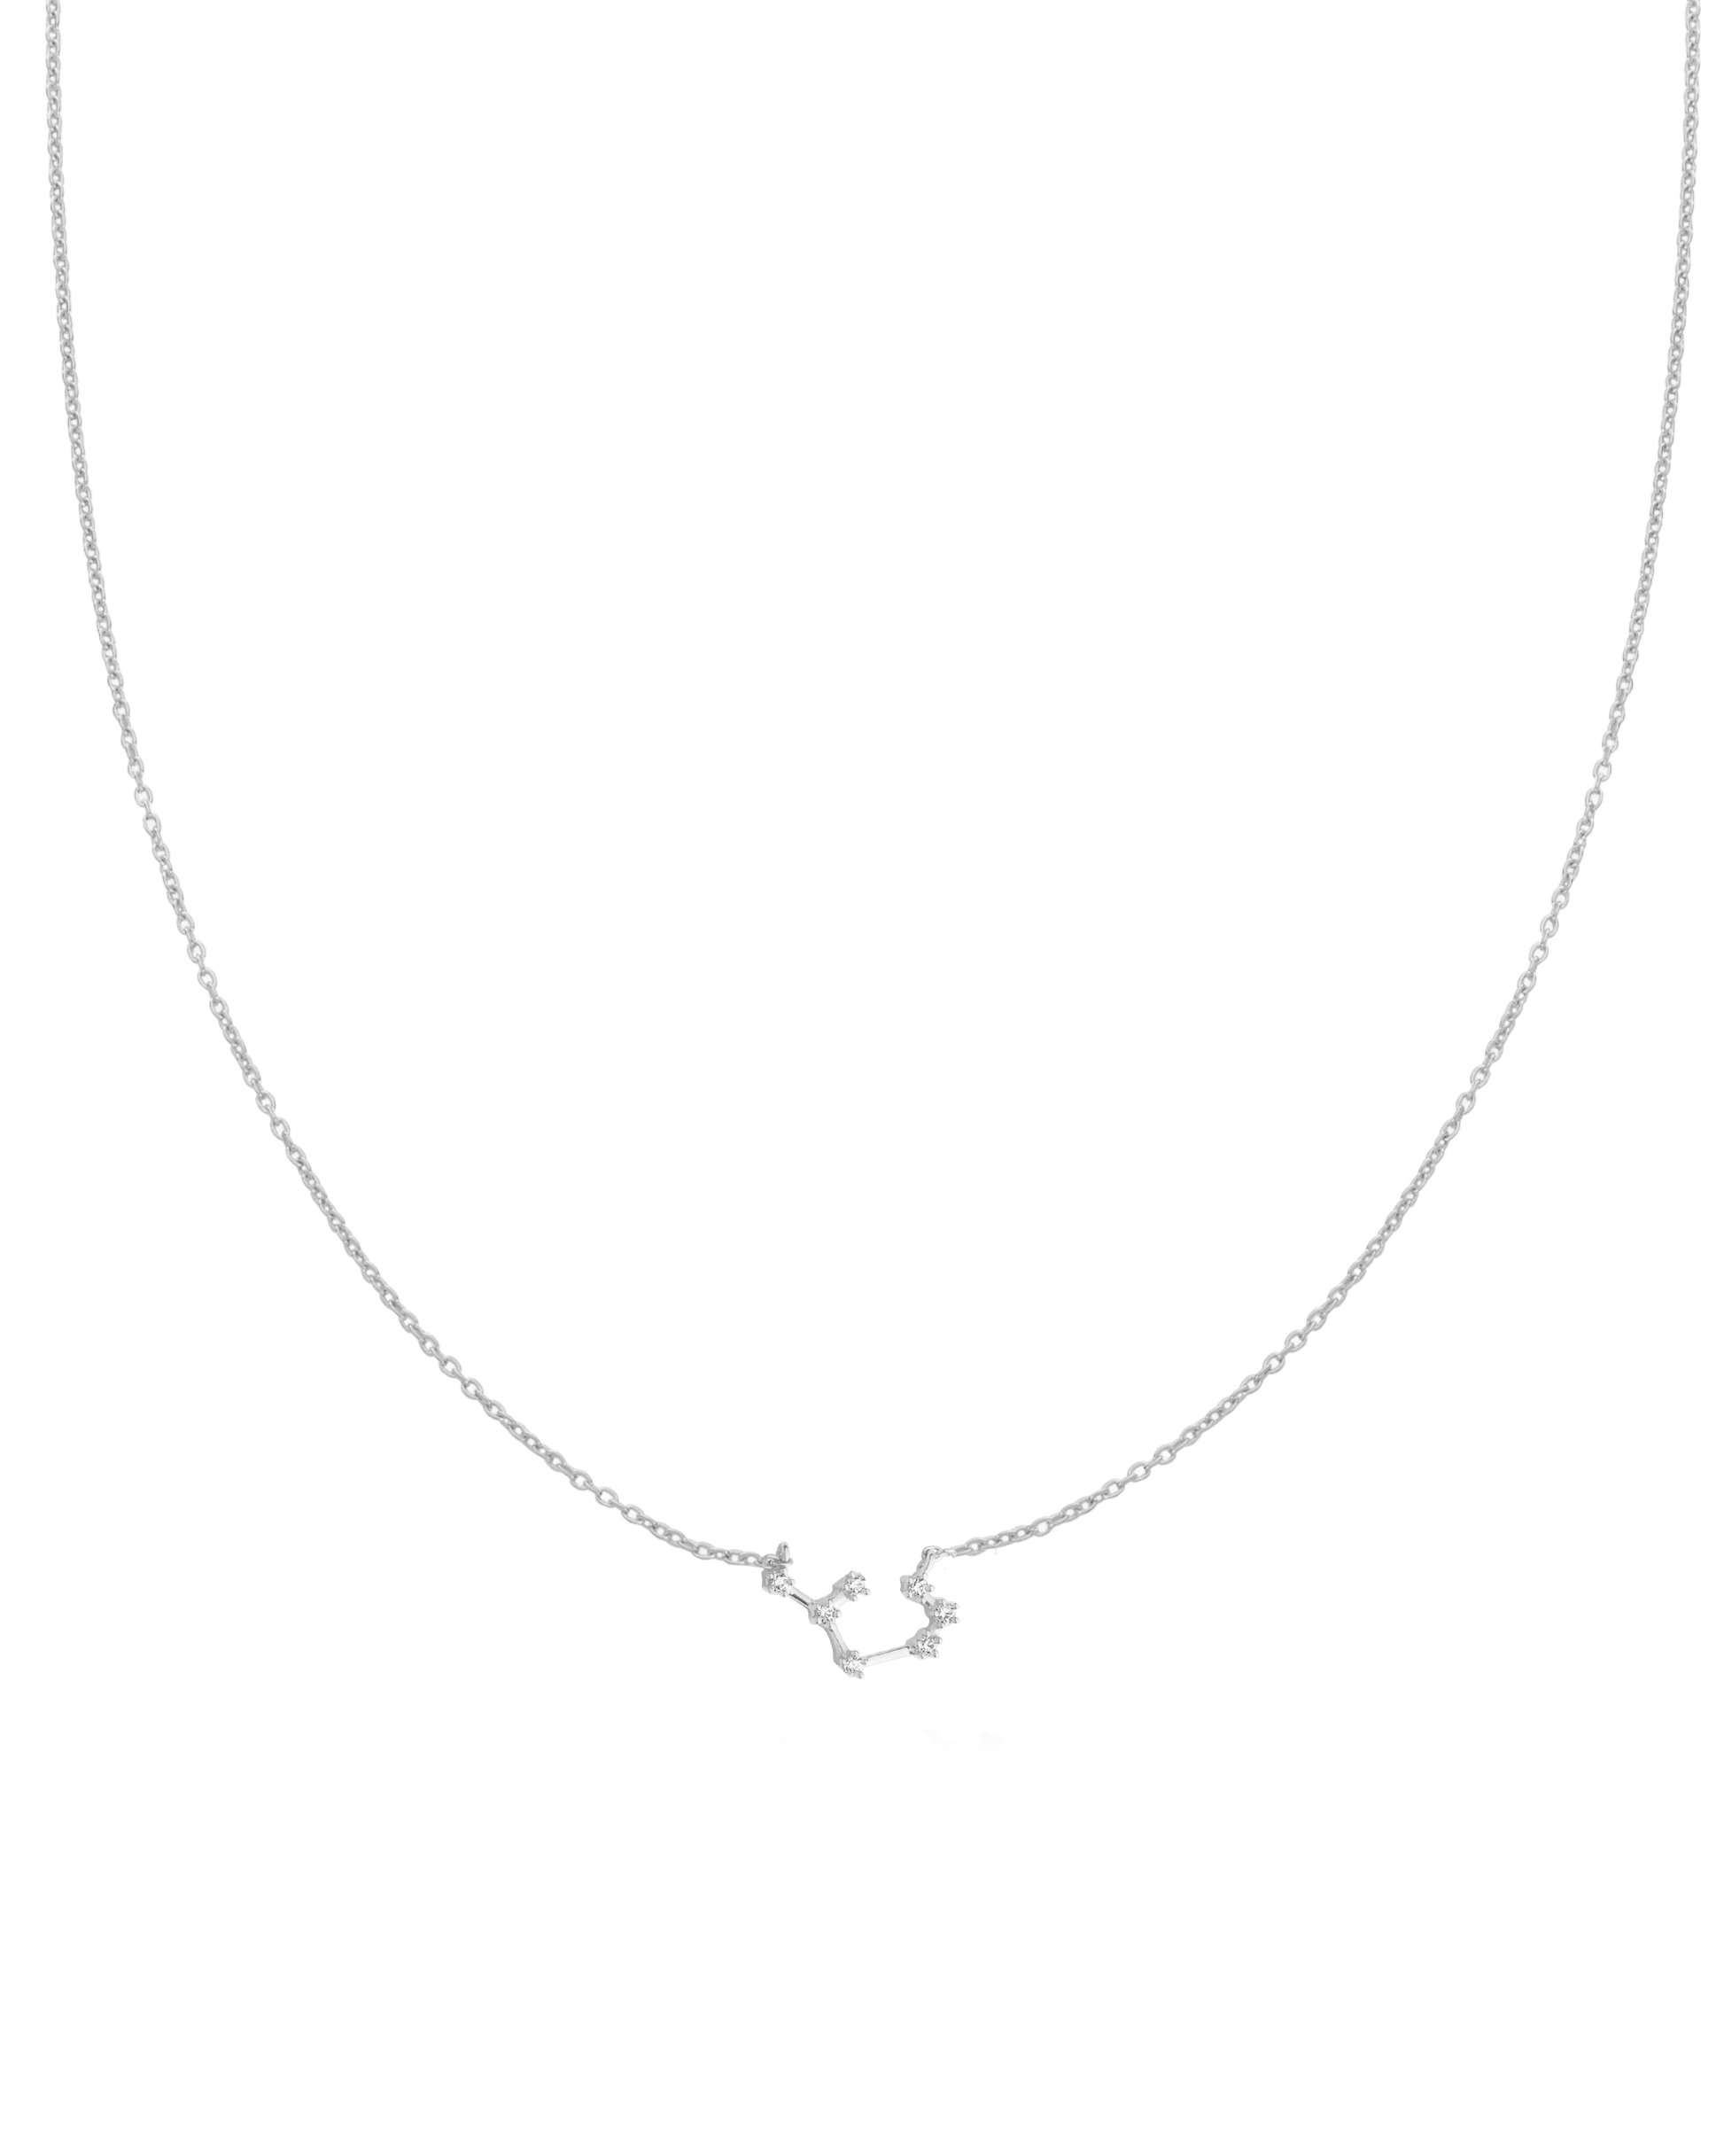 Sagittarius Constellation Necklace - 18K Gold Vermeil Necklaces magal-dev 